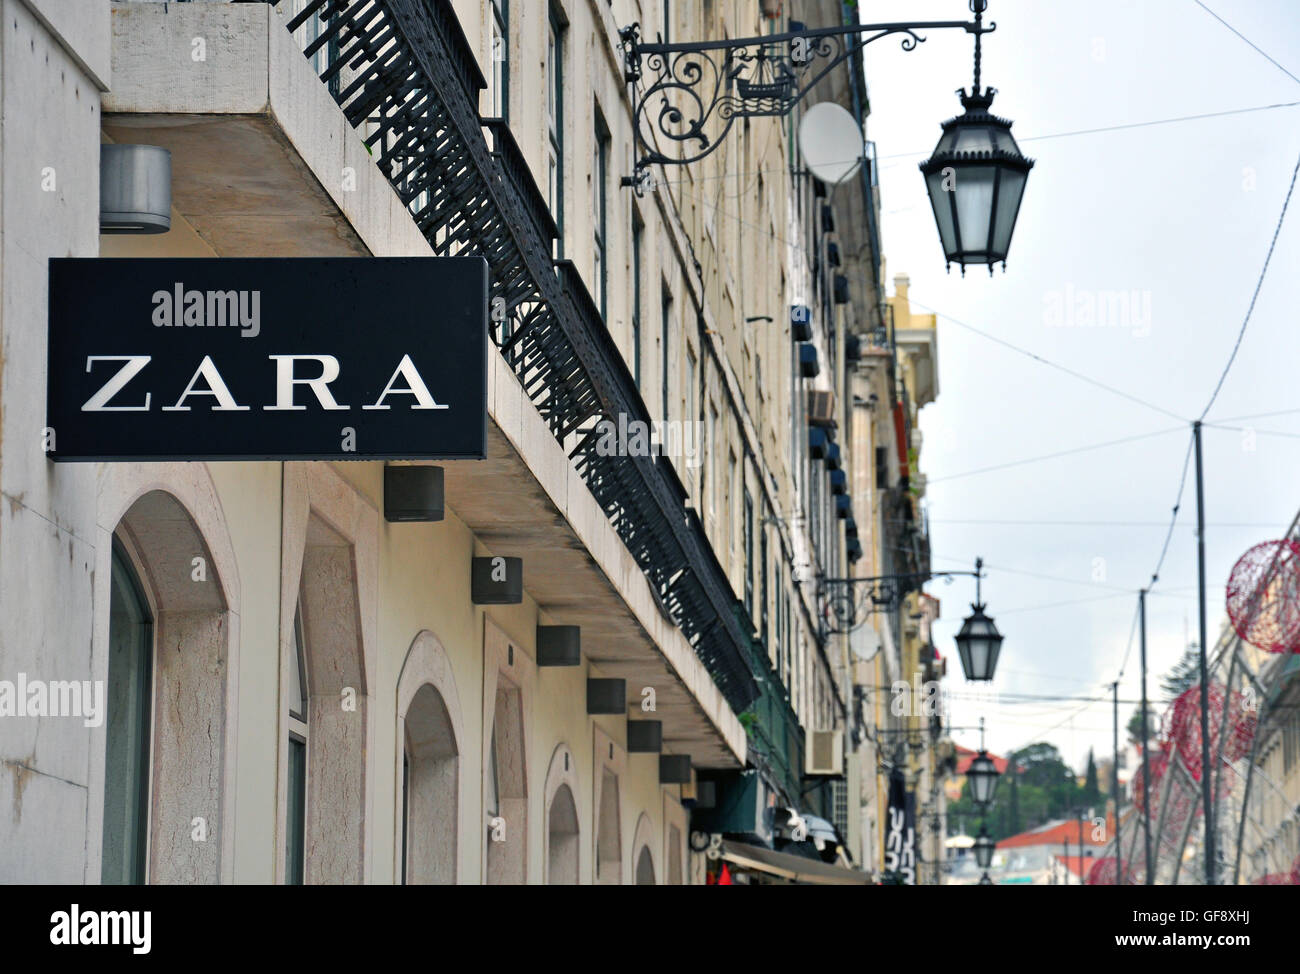 Lisbon, Portugal - December 25, 2013: Zara store sign on the grey building on Agusta street in Baixa district of Lisbon on Decem Stock Photo